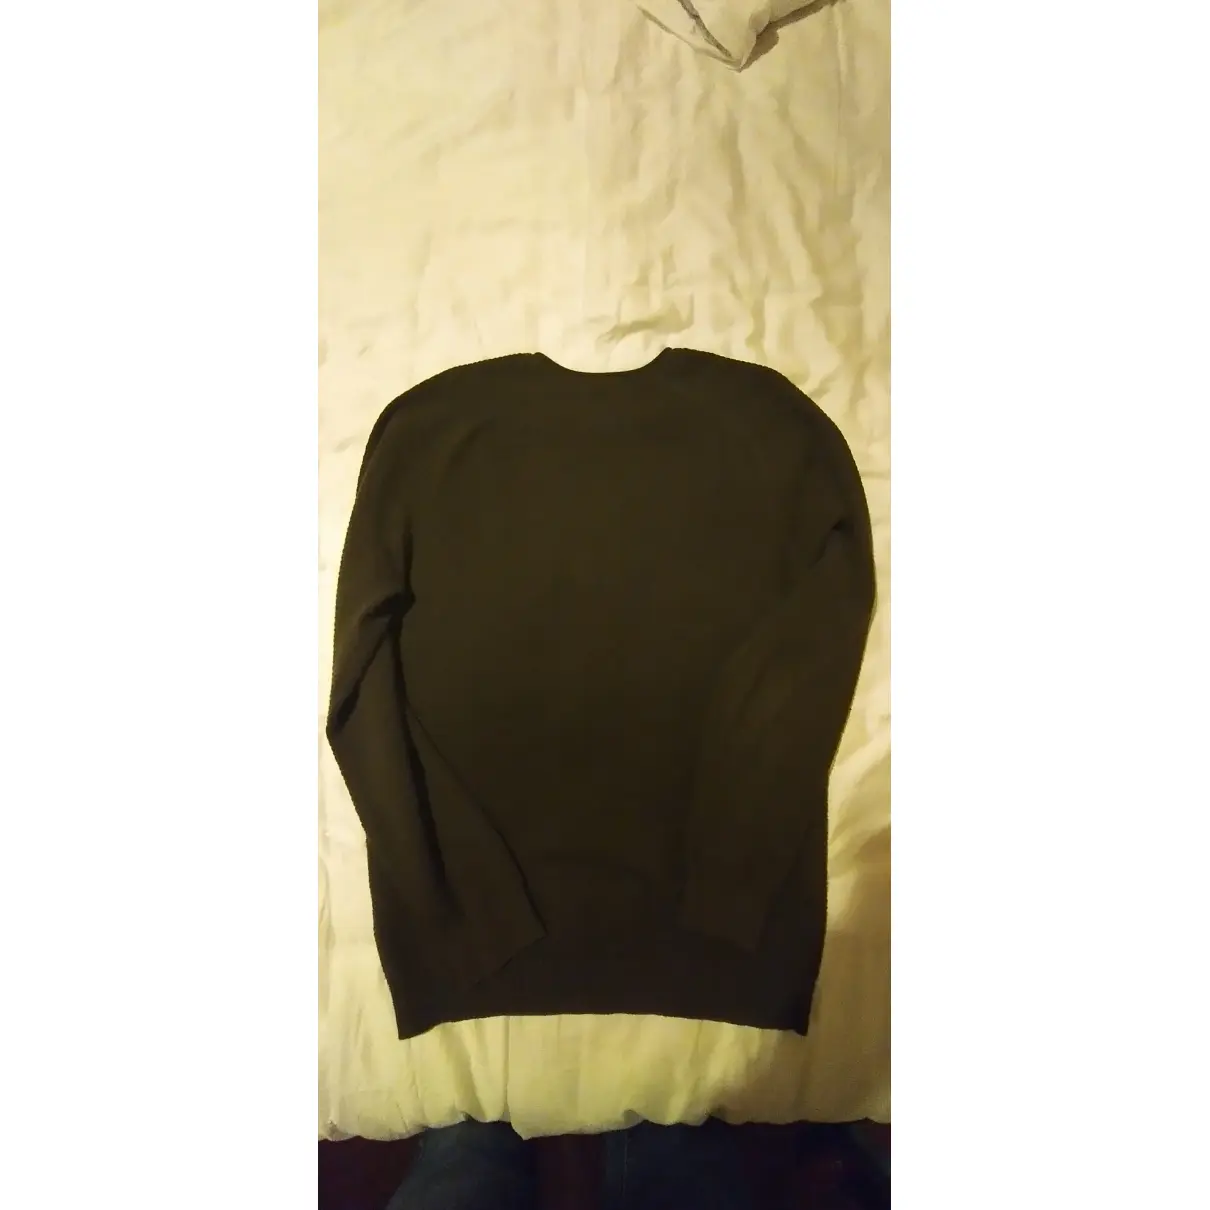 Buy Massimo Dutti Green Cotton Knitwear & Sweatshirt online